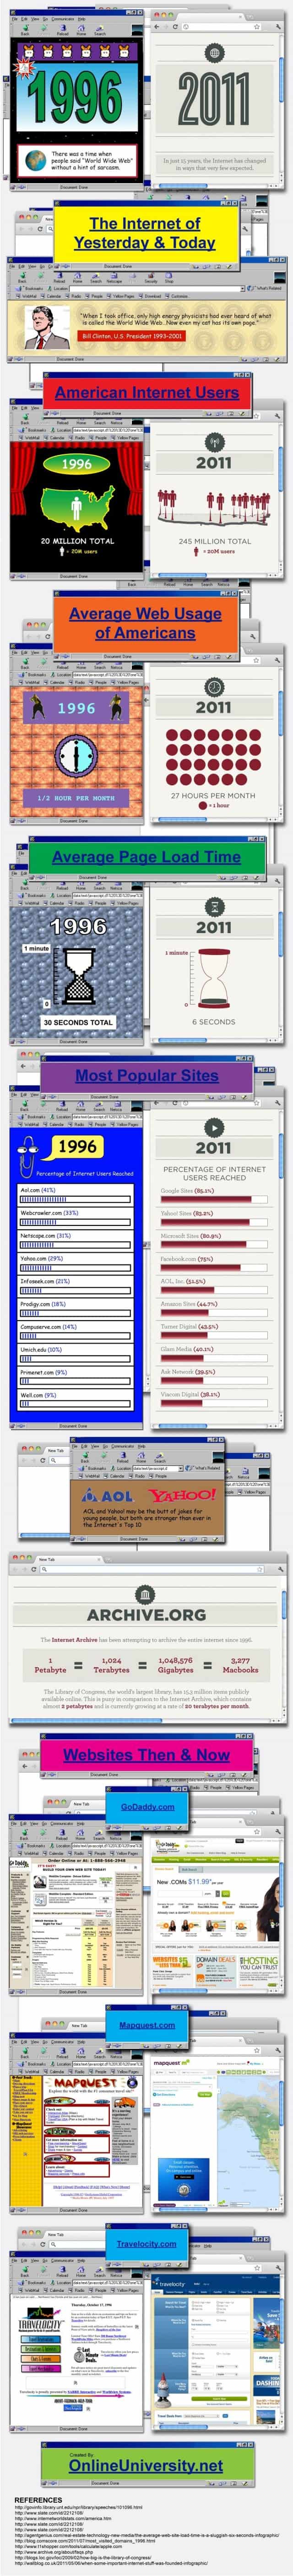 Internet of 1996 vs 2011